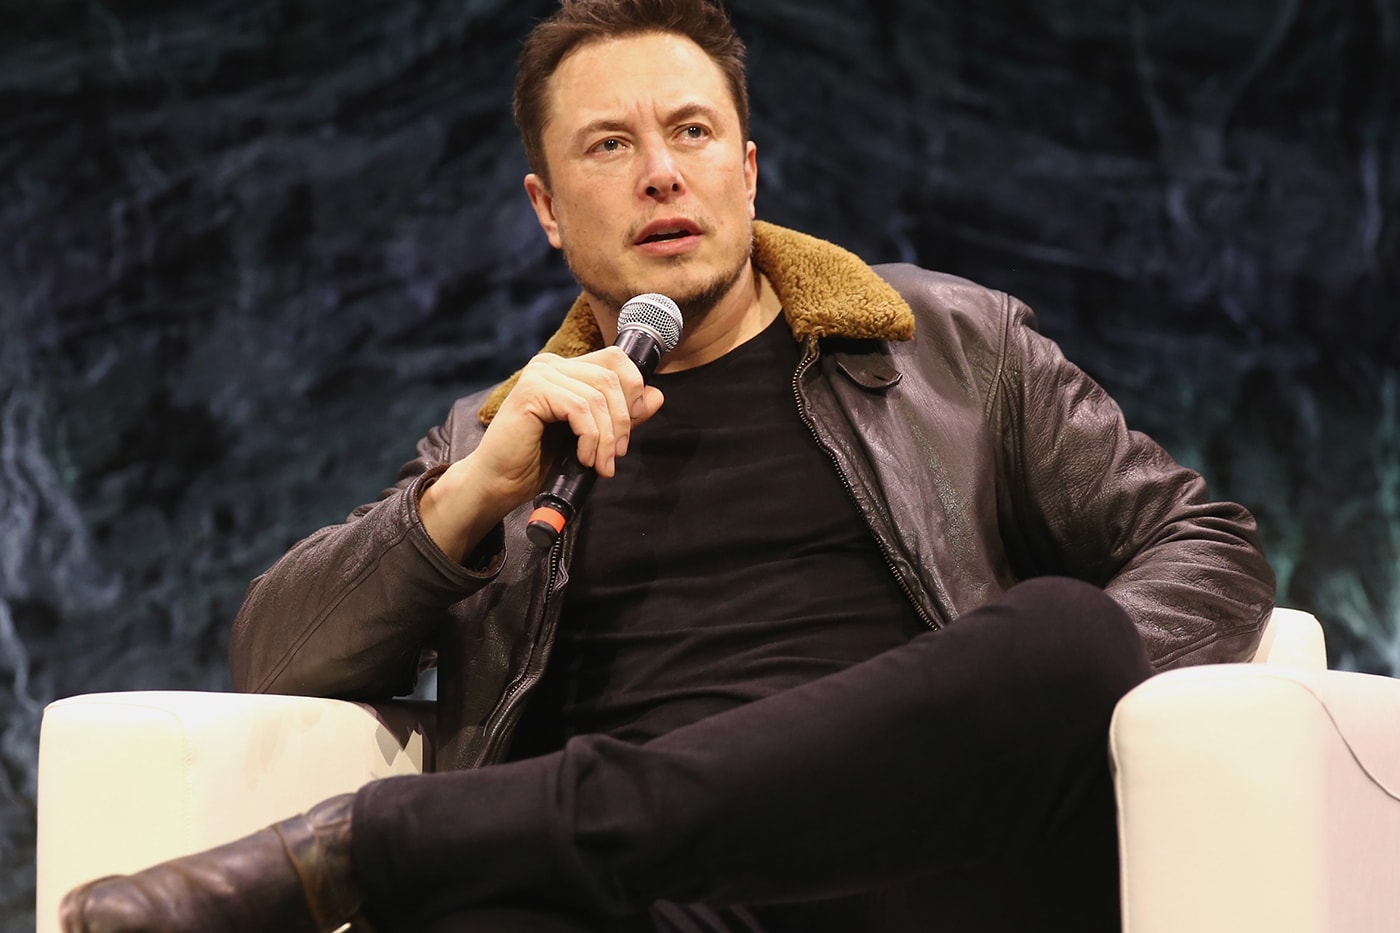 Elon Musk Asperger's syndrome 'Saturday Night Live' Reveal News monologue Dan Aykroyd snl 